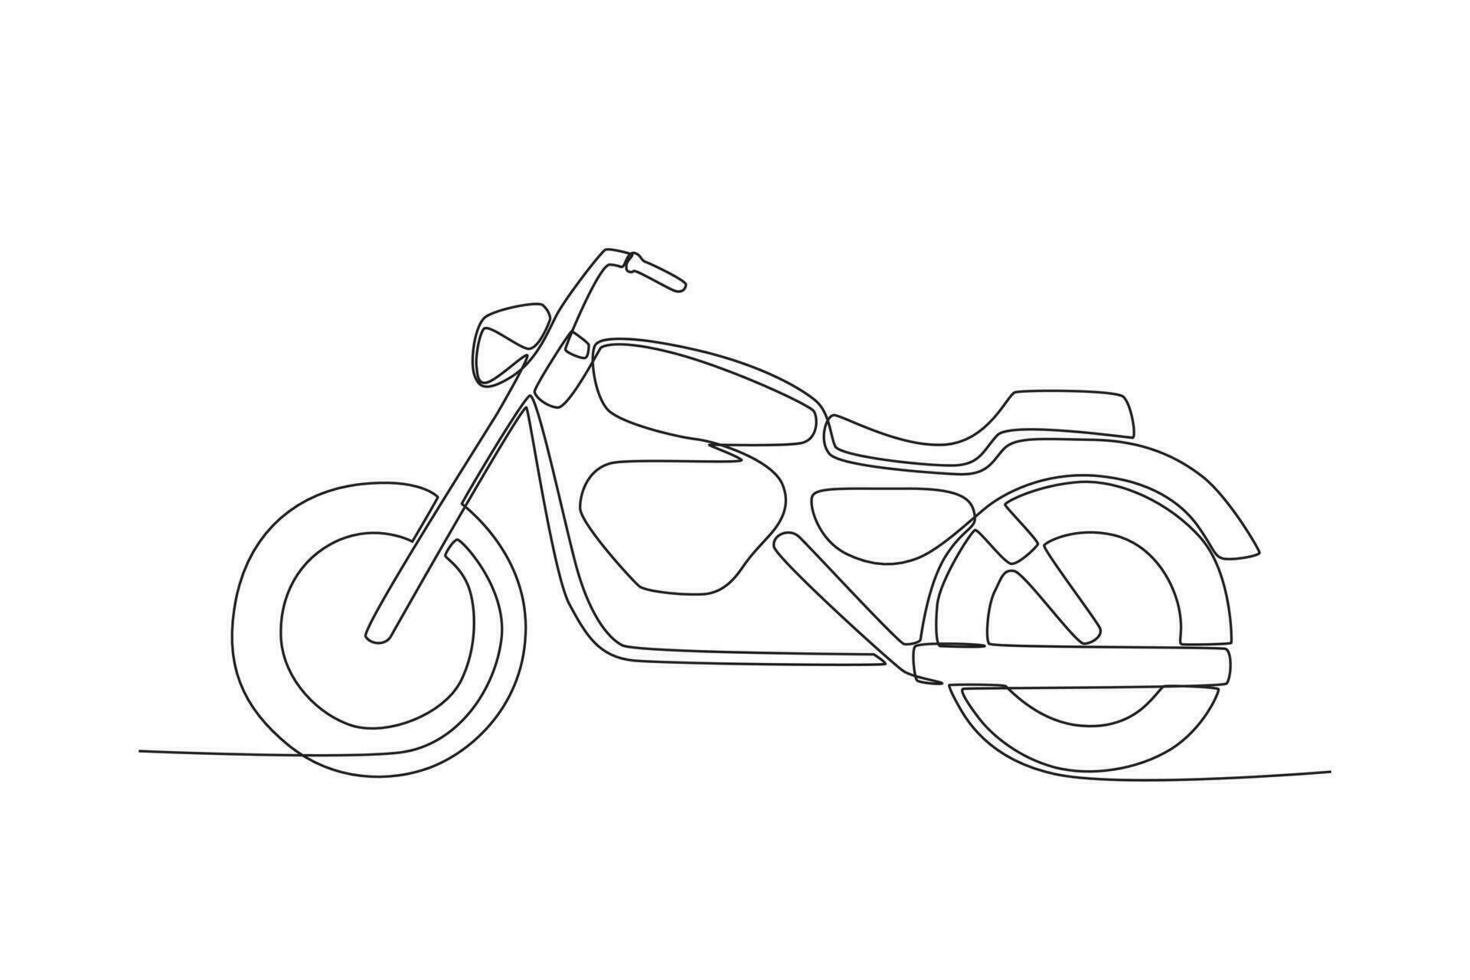 A street motorcycle side vide vector